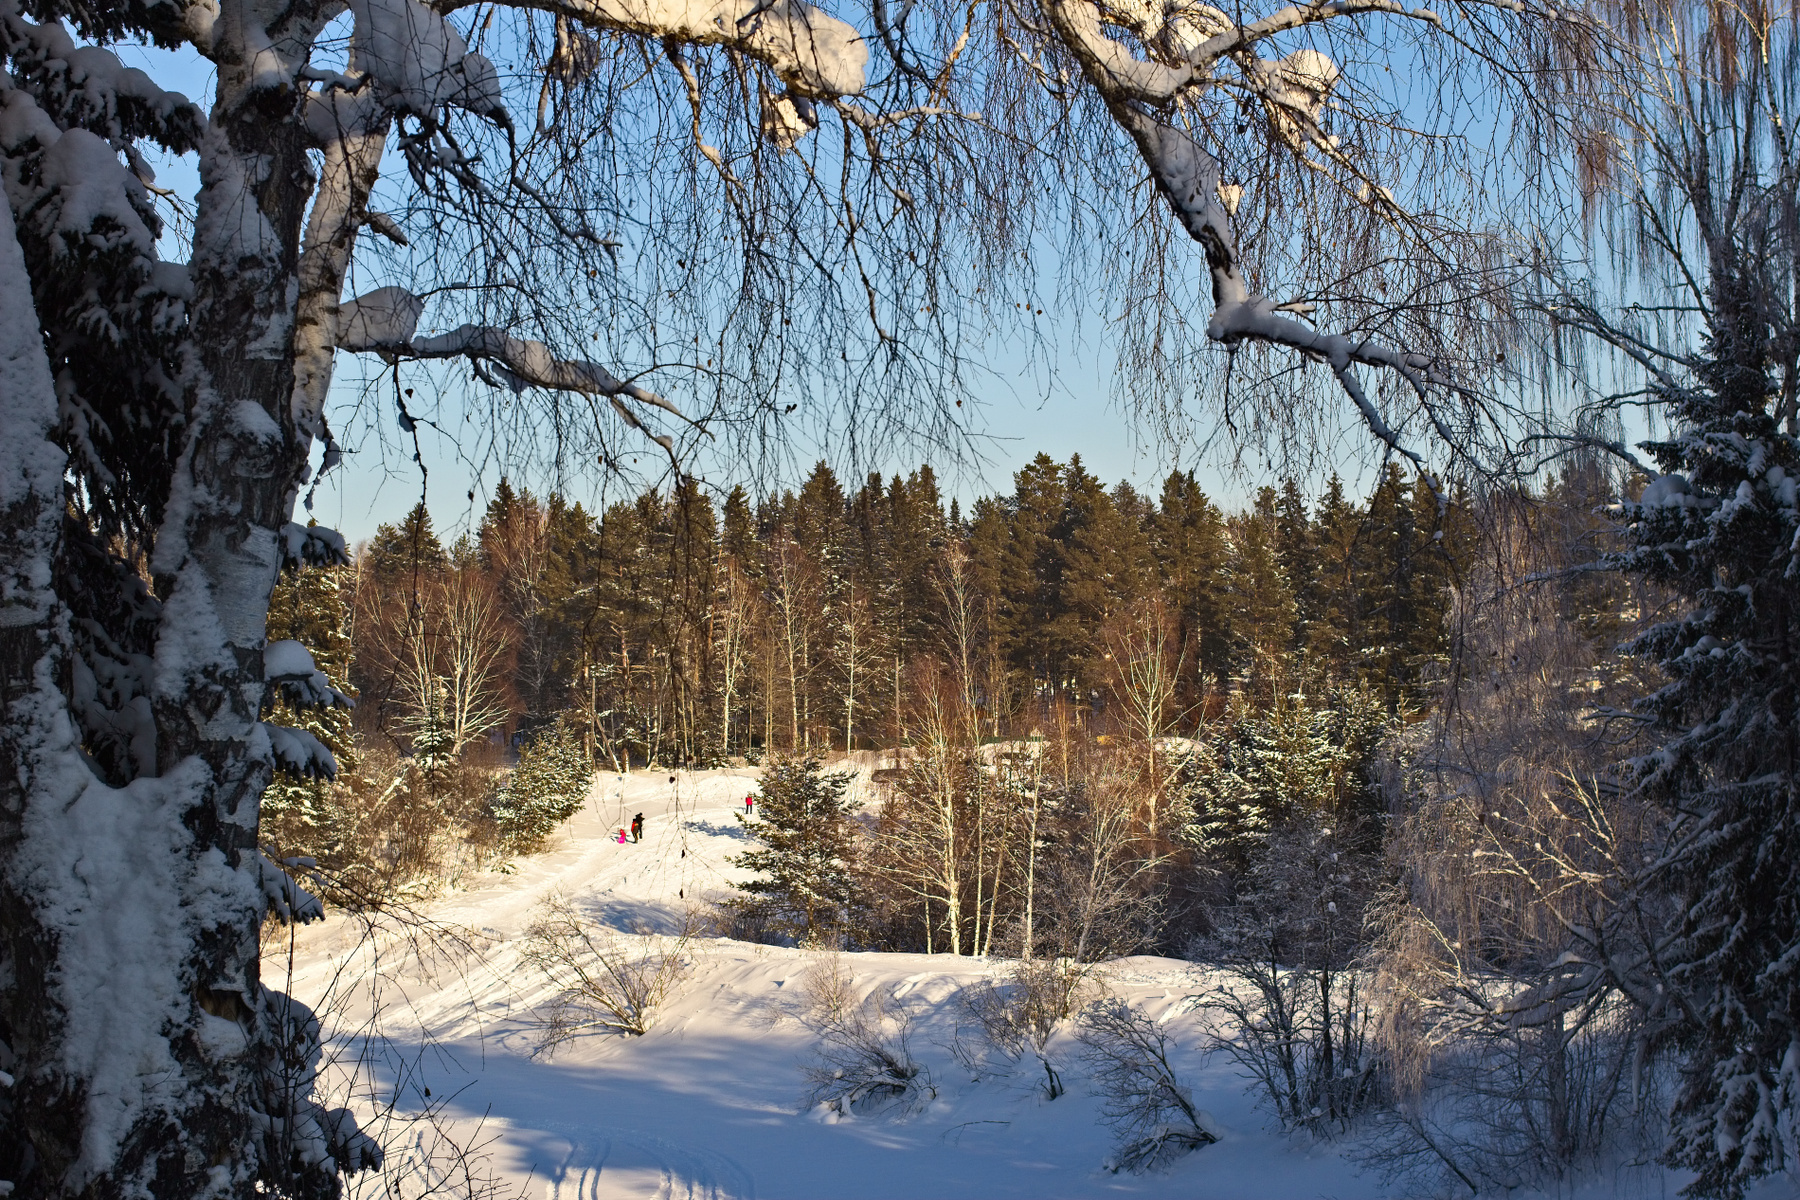 погода была прекрасная) зима природа лес мороз прогулка снег солнце тени ели сибирь